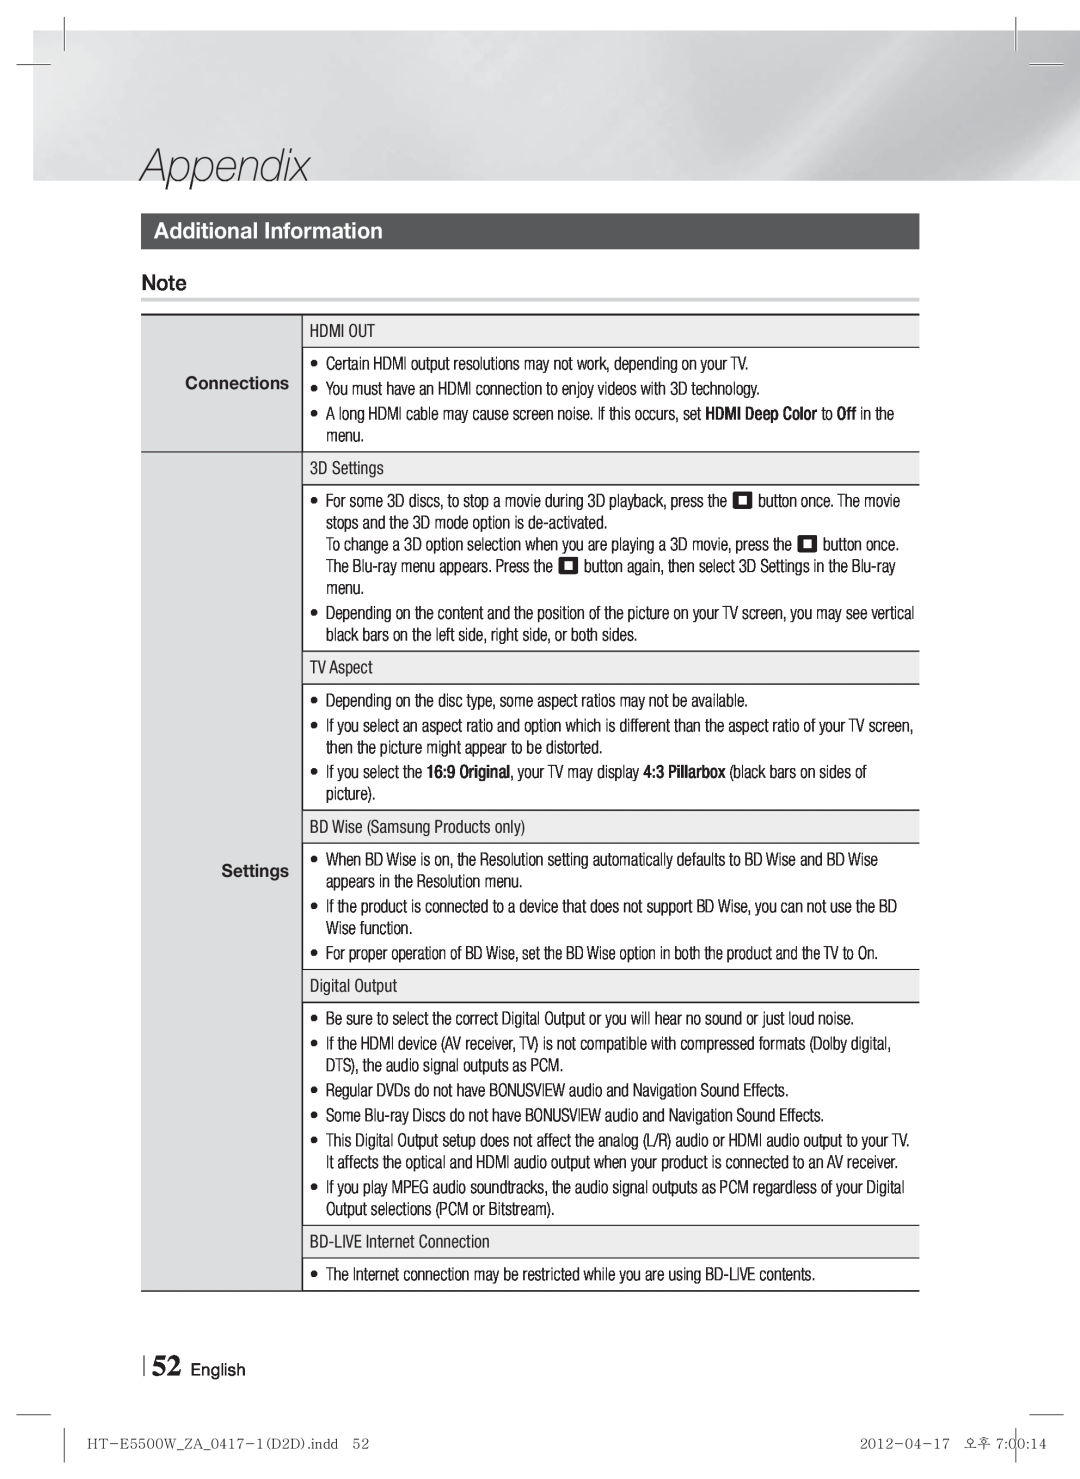 Samsung HT-E550 user manual Appendix, Additional Information, Settings 